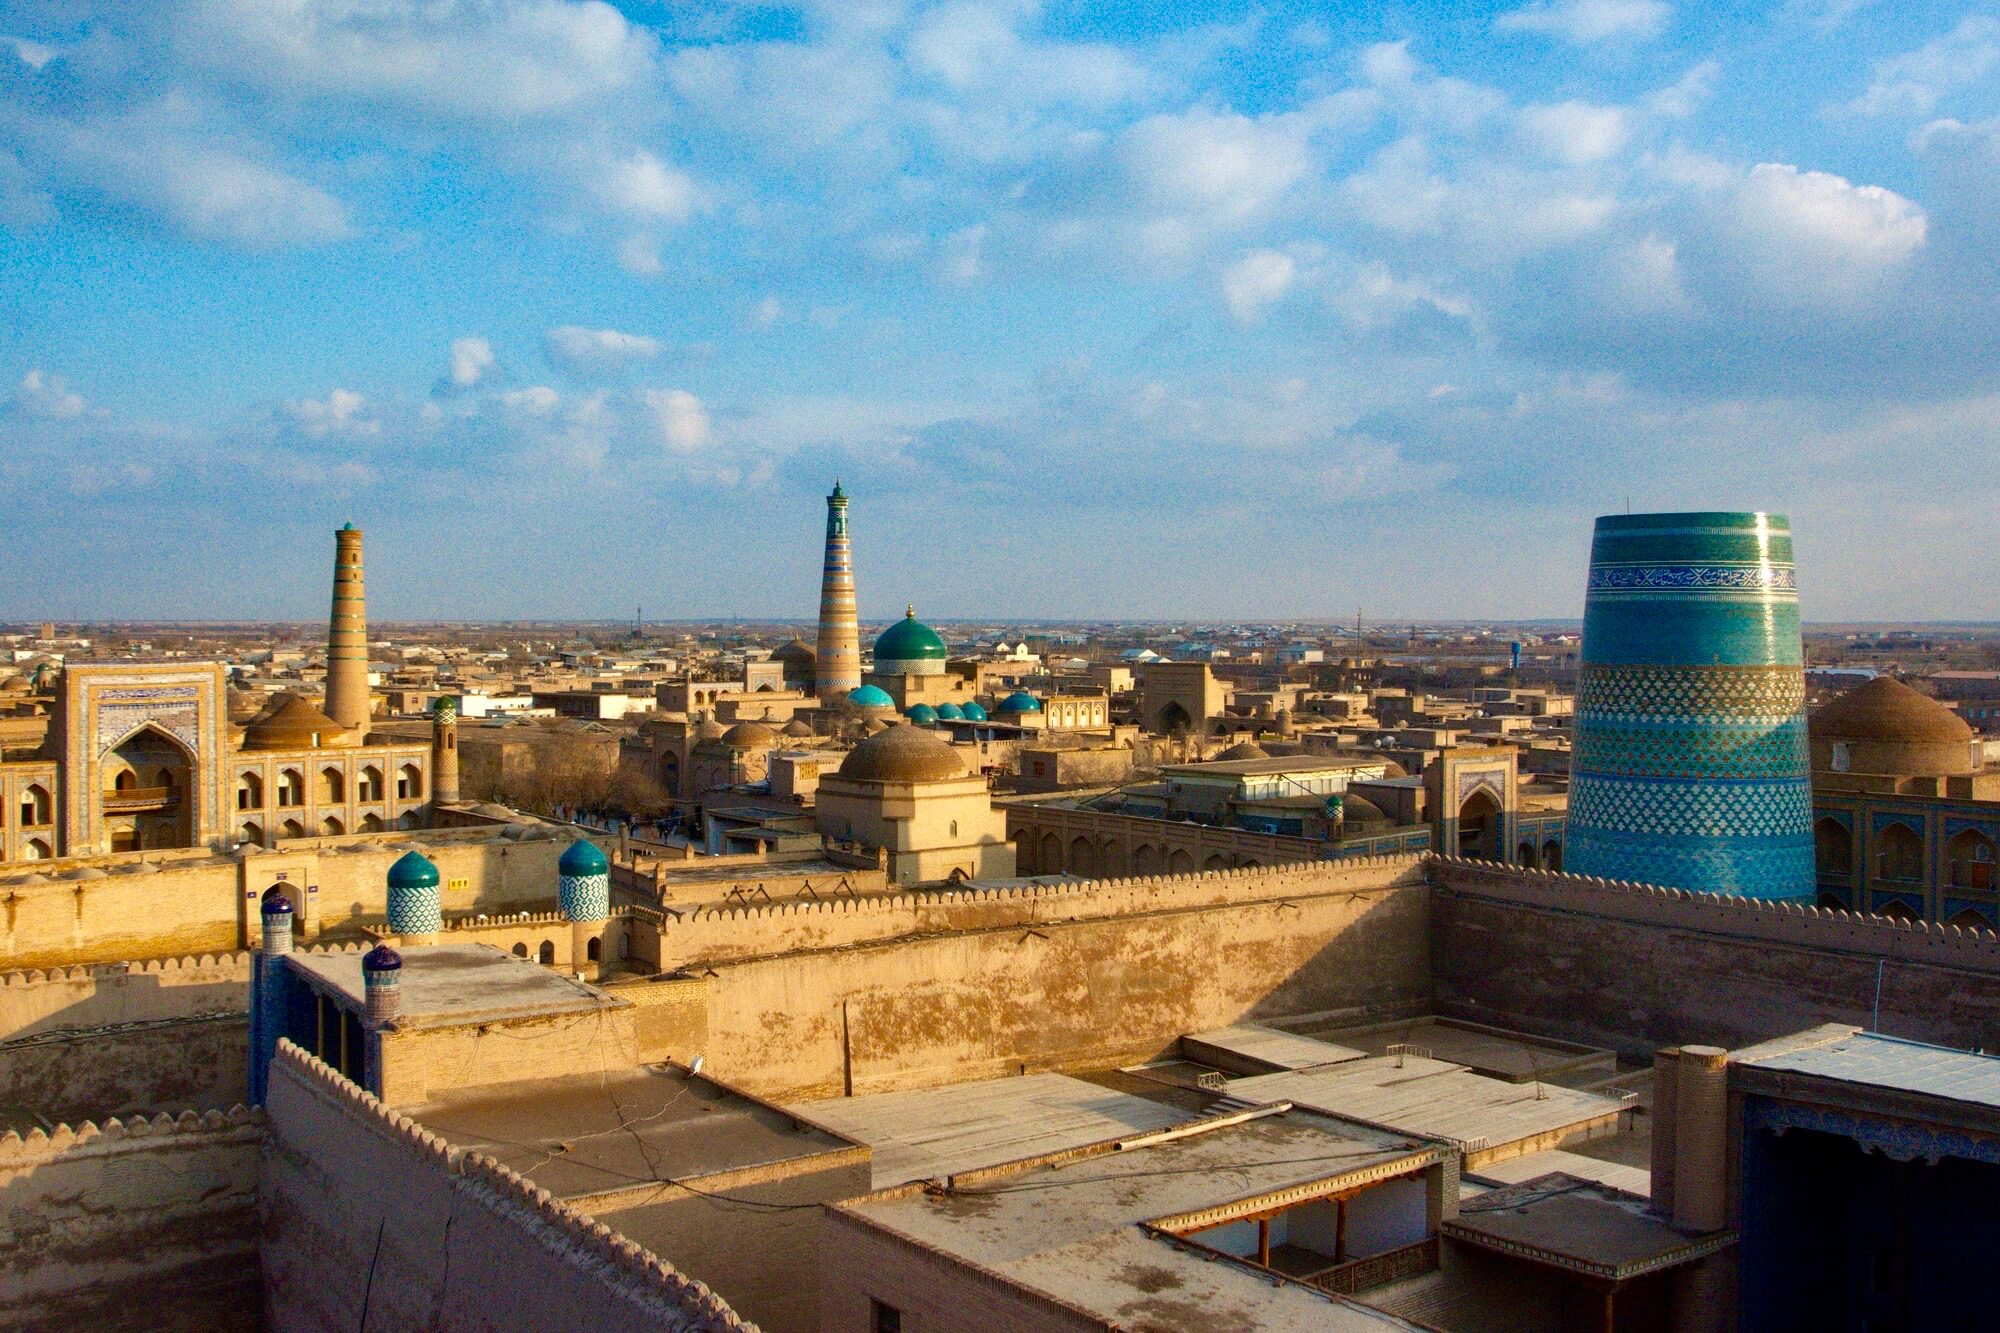 Khiva is a classic silk road city in Uzbekistan